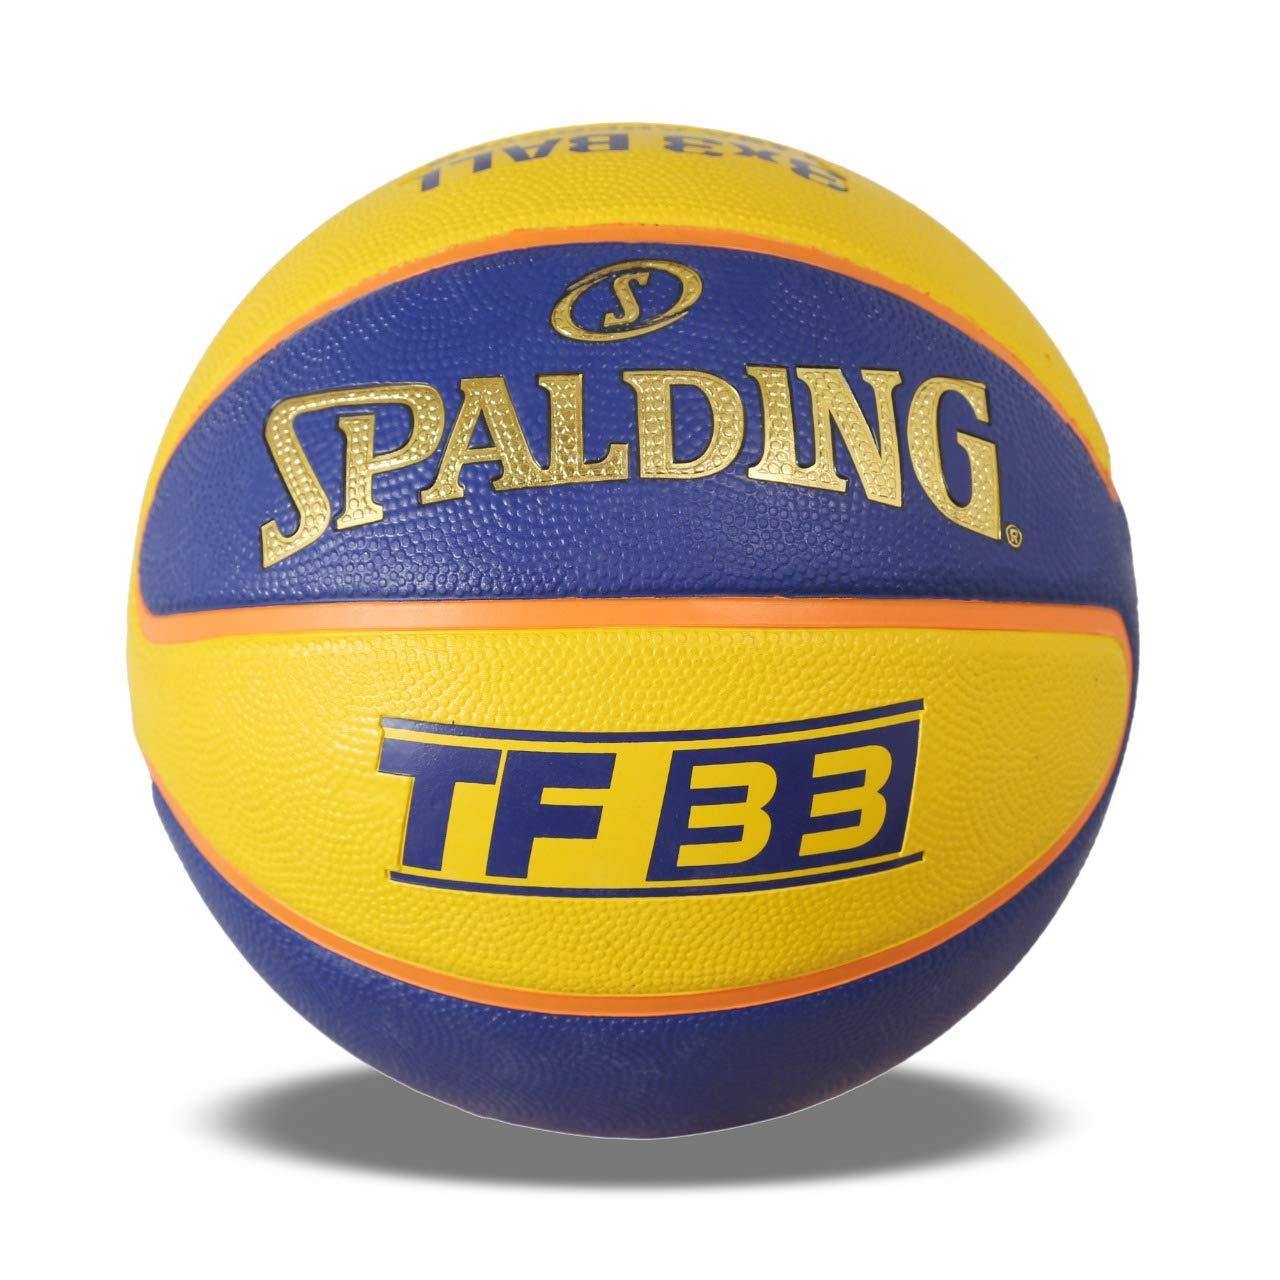 Spalding BB-SPALDING-TF-33-YLW-BLU-6 Basketball, Size 6 (Yellow-Blue) - Best Price online Prokicksports.com